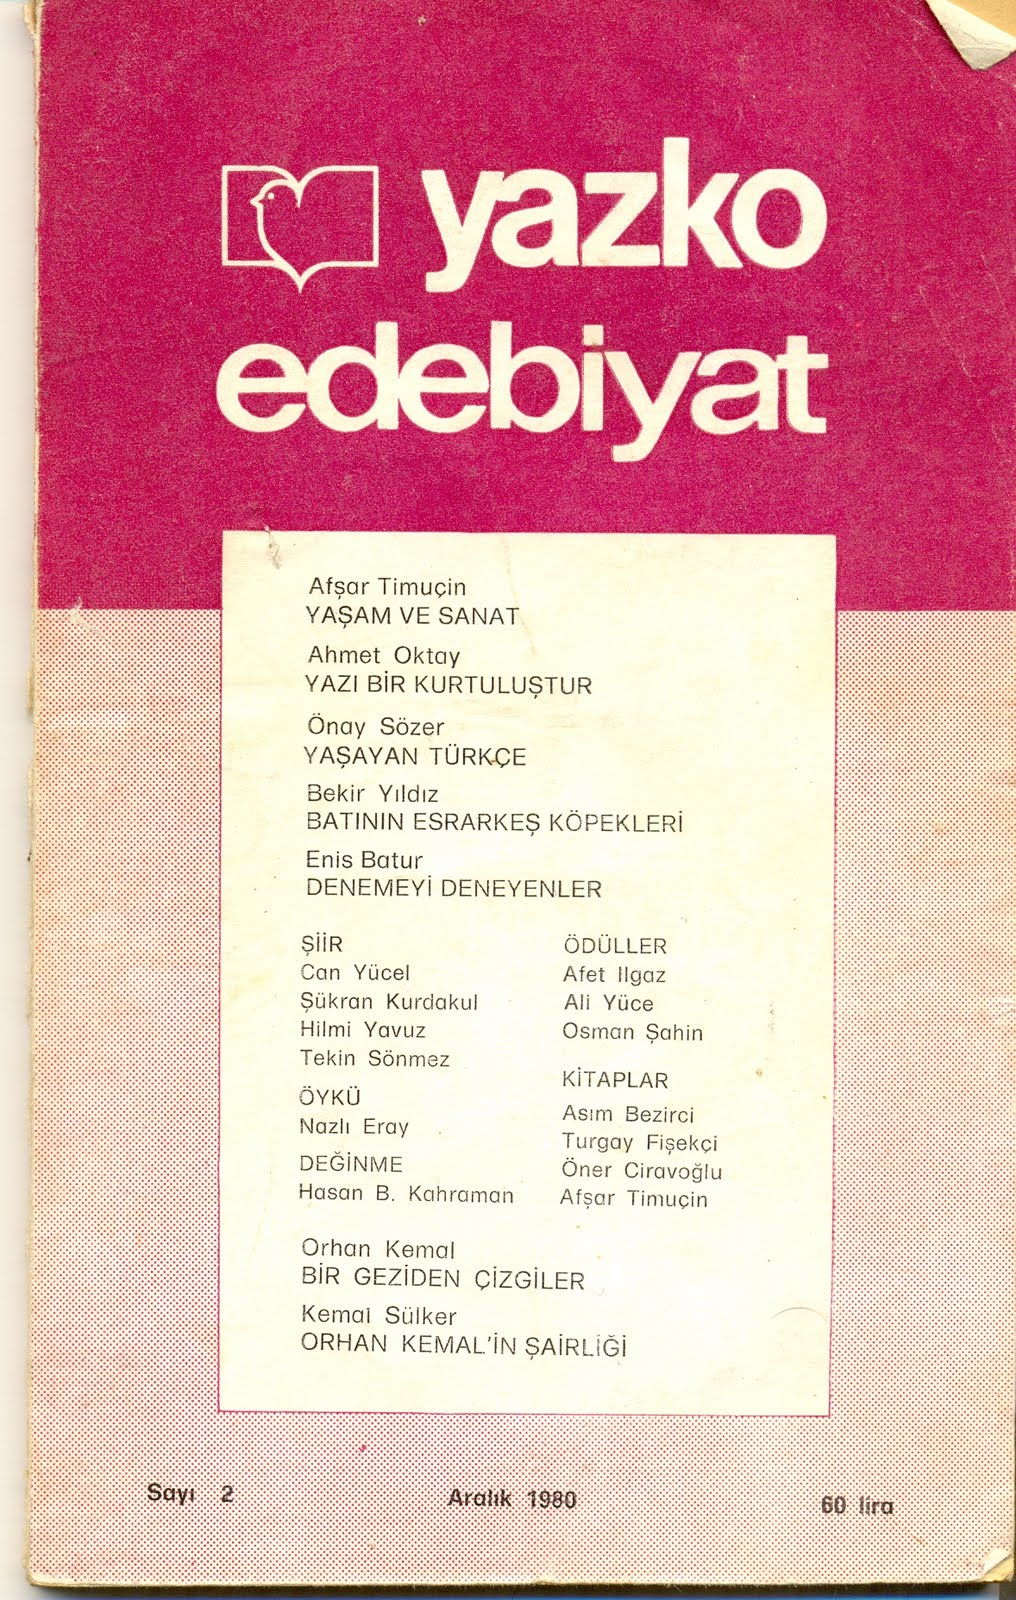 yks turkce edebiyat 1980 sonrasi turk siiri